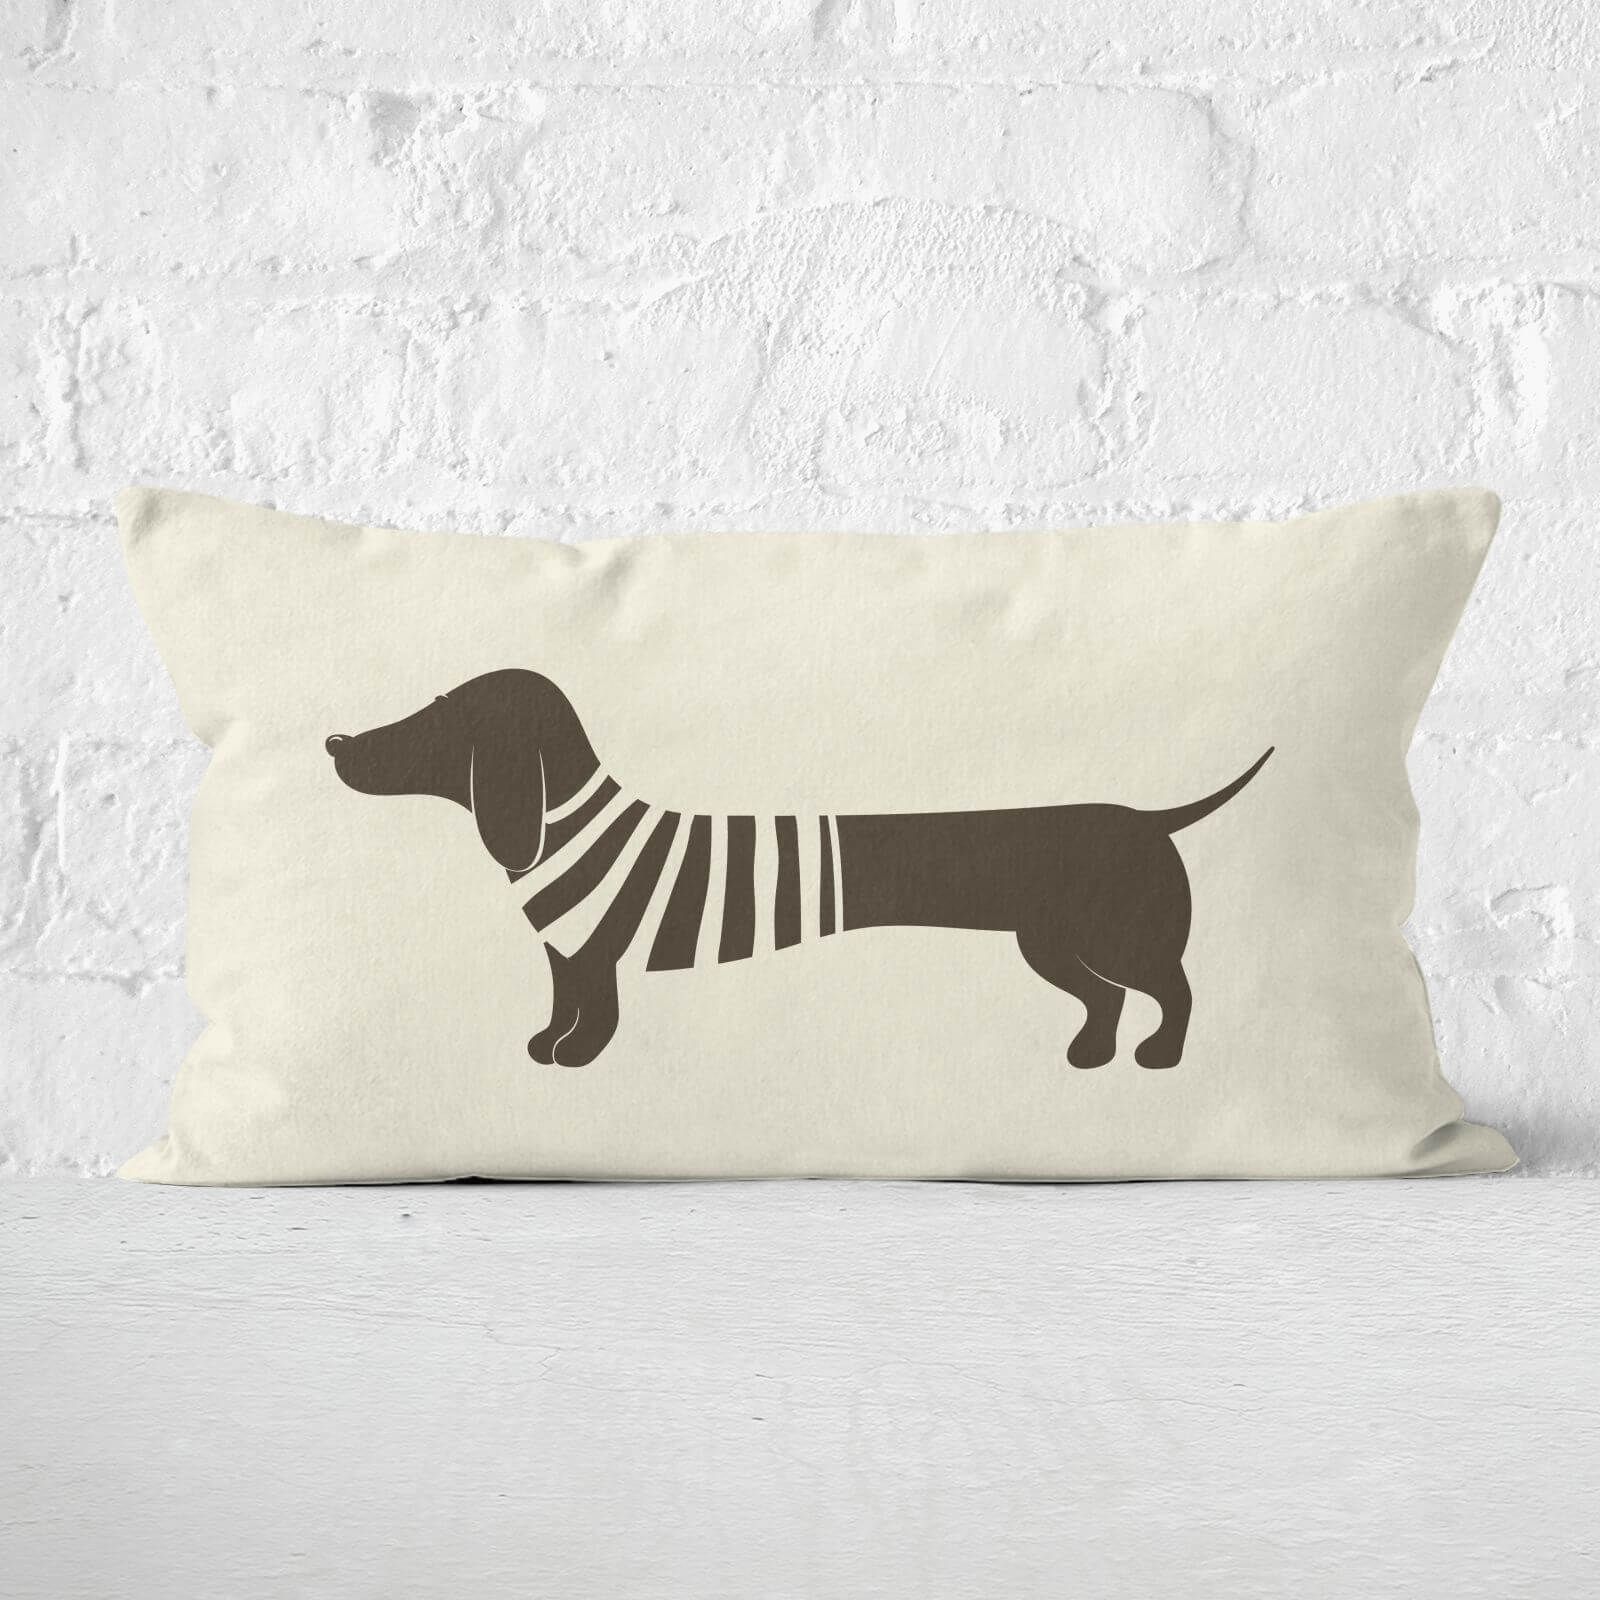 By Iwoot Stripey jumper sausage dog rectangular cushion - soft touch